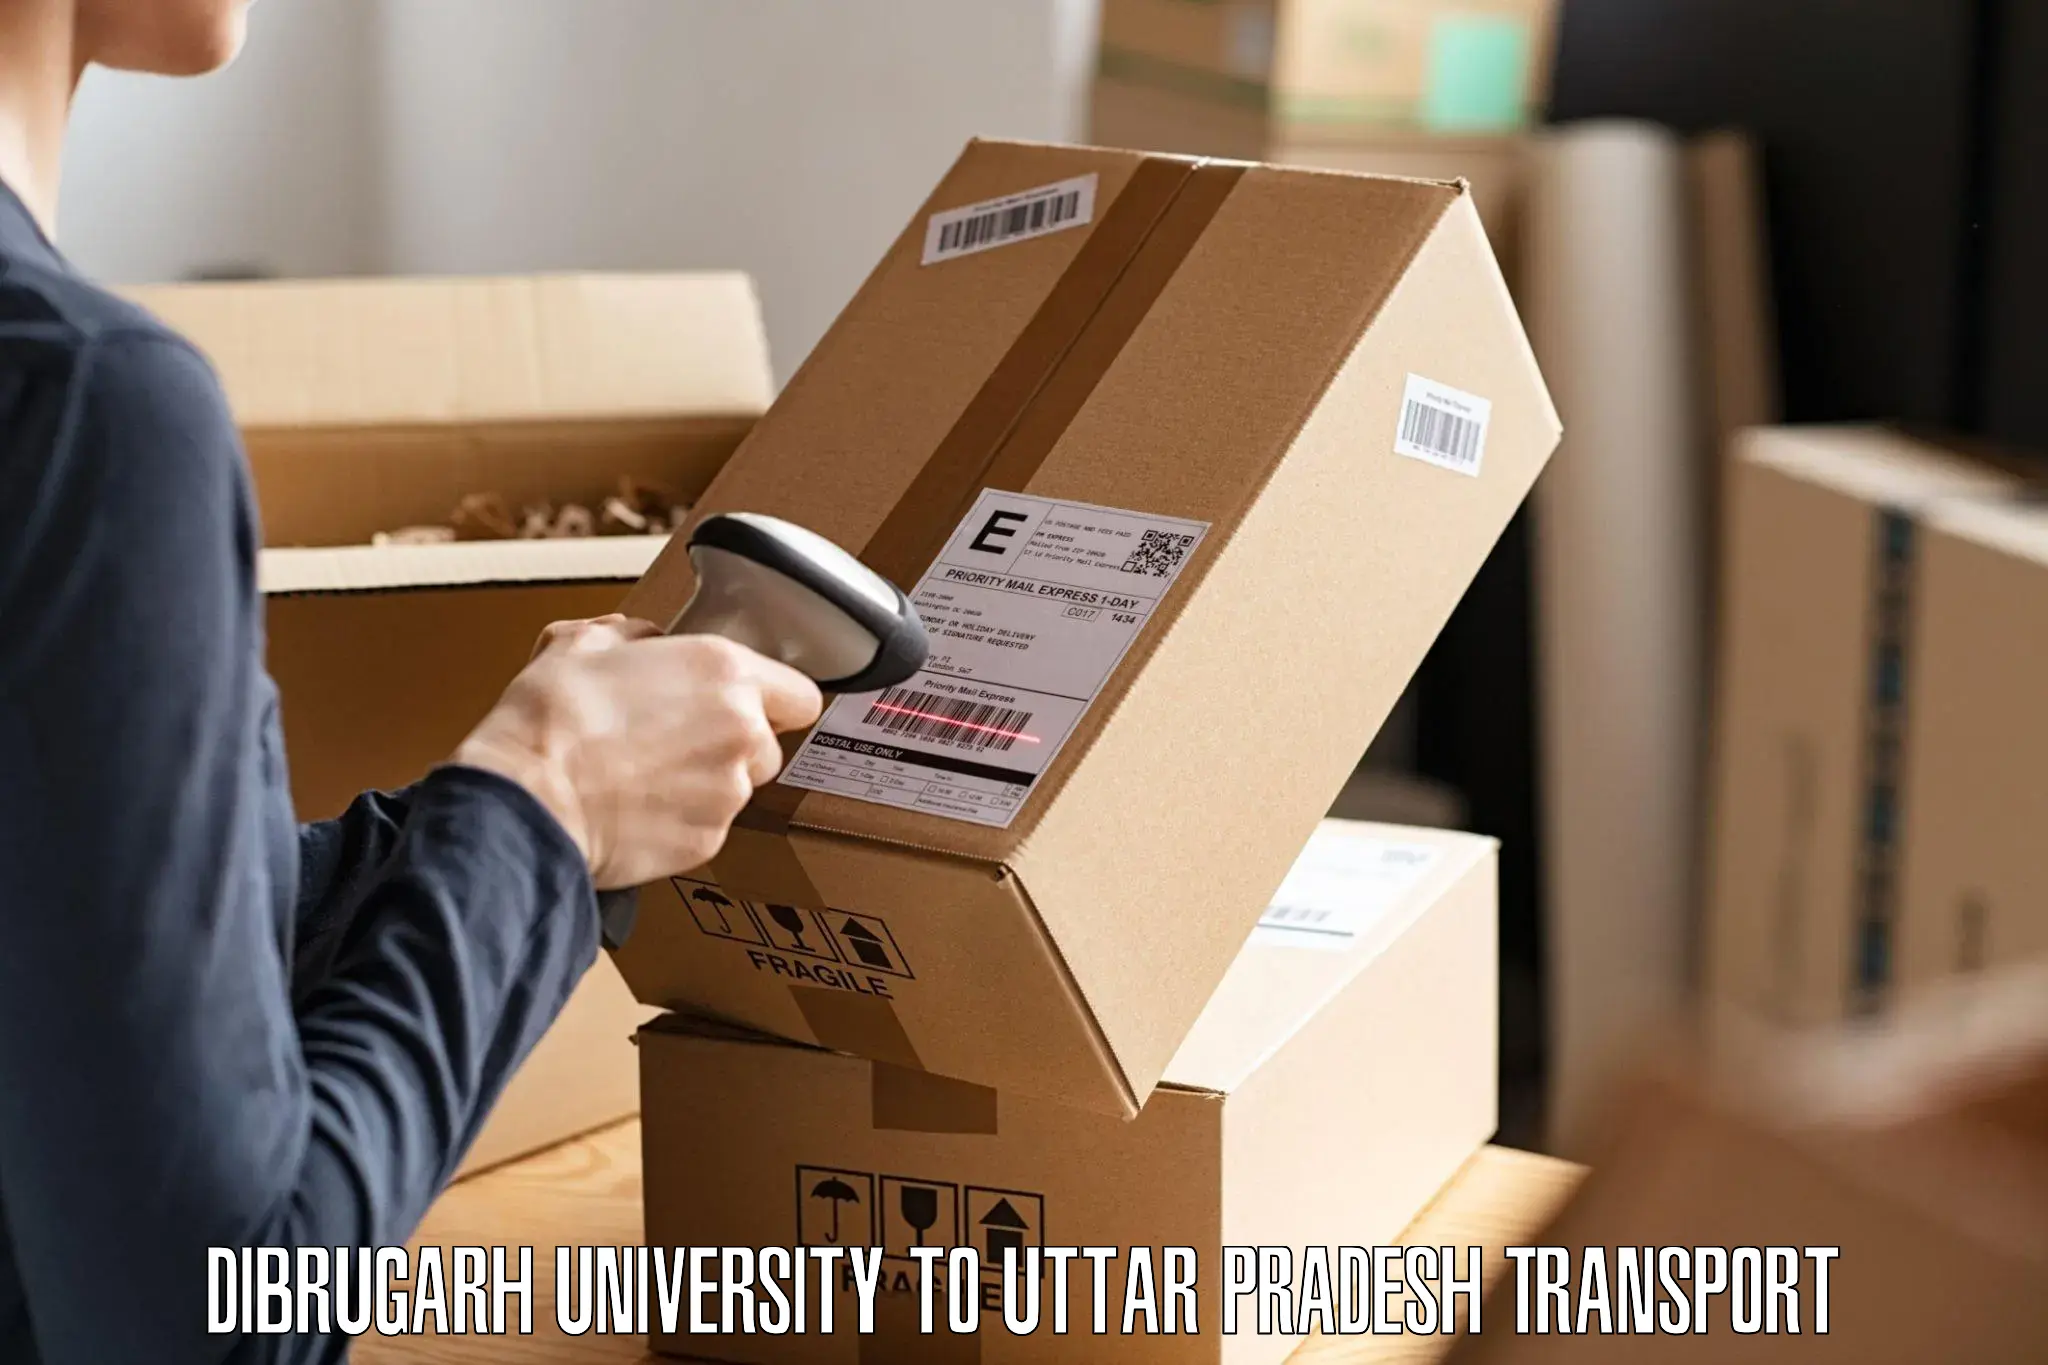 Transport in sharing Dibrugarh University to Ghaziabad